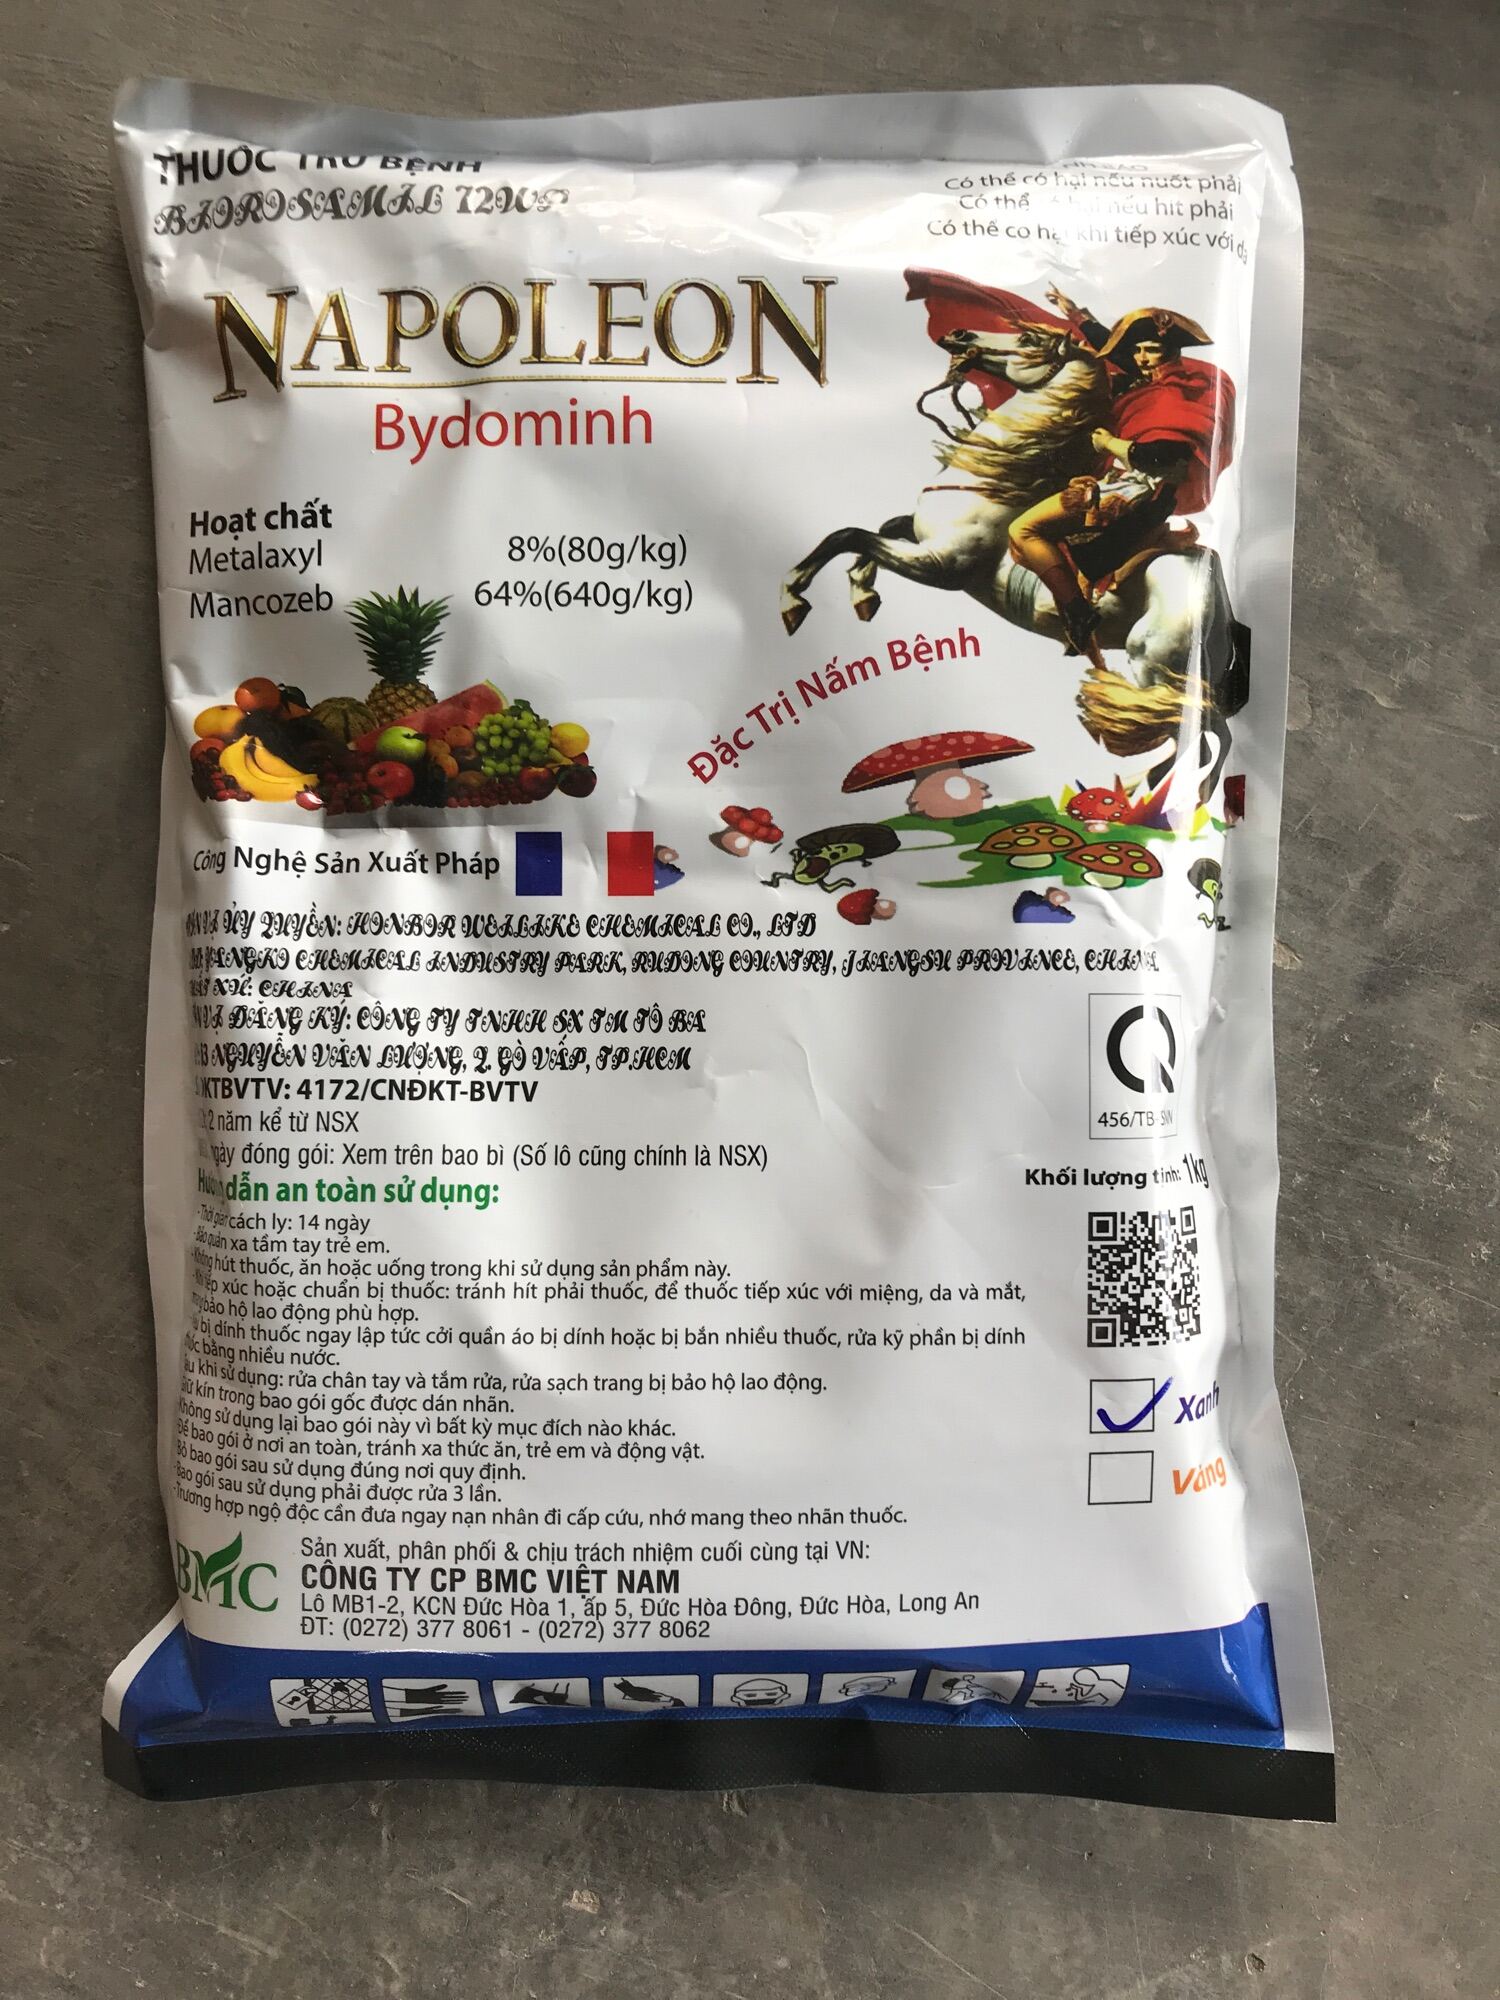 Thuốc trừ bệnh Biorosamil 72WP- Bột xanh Napoleon 1Kg Metalaxyl 80g kg+